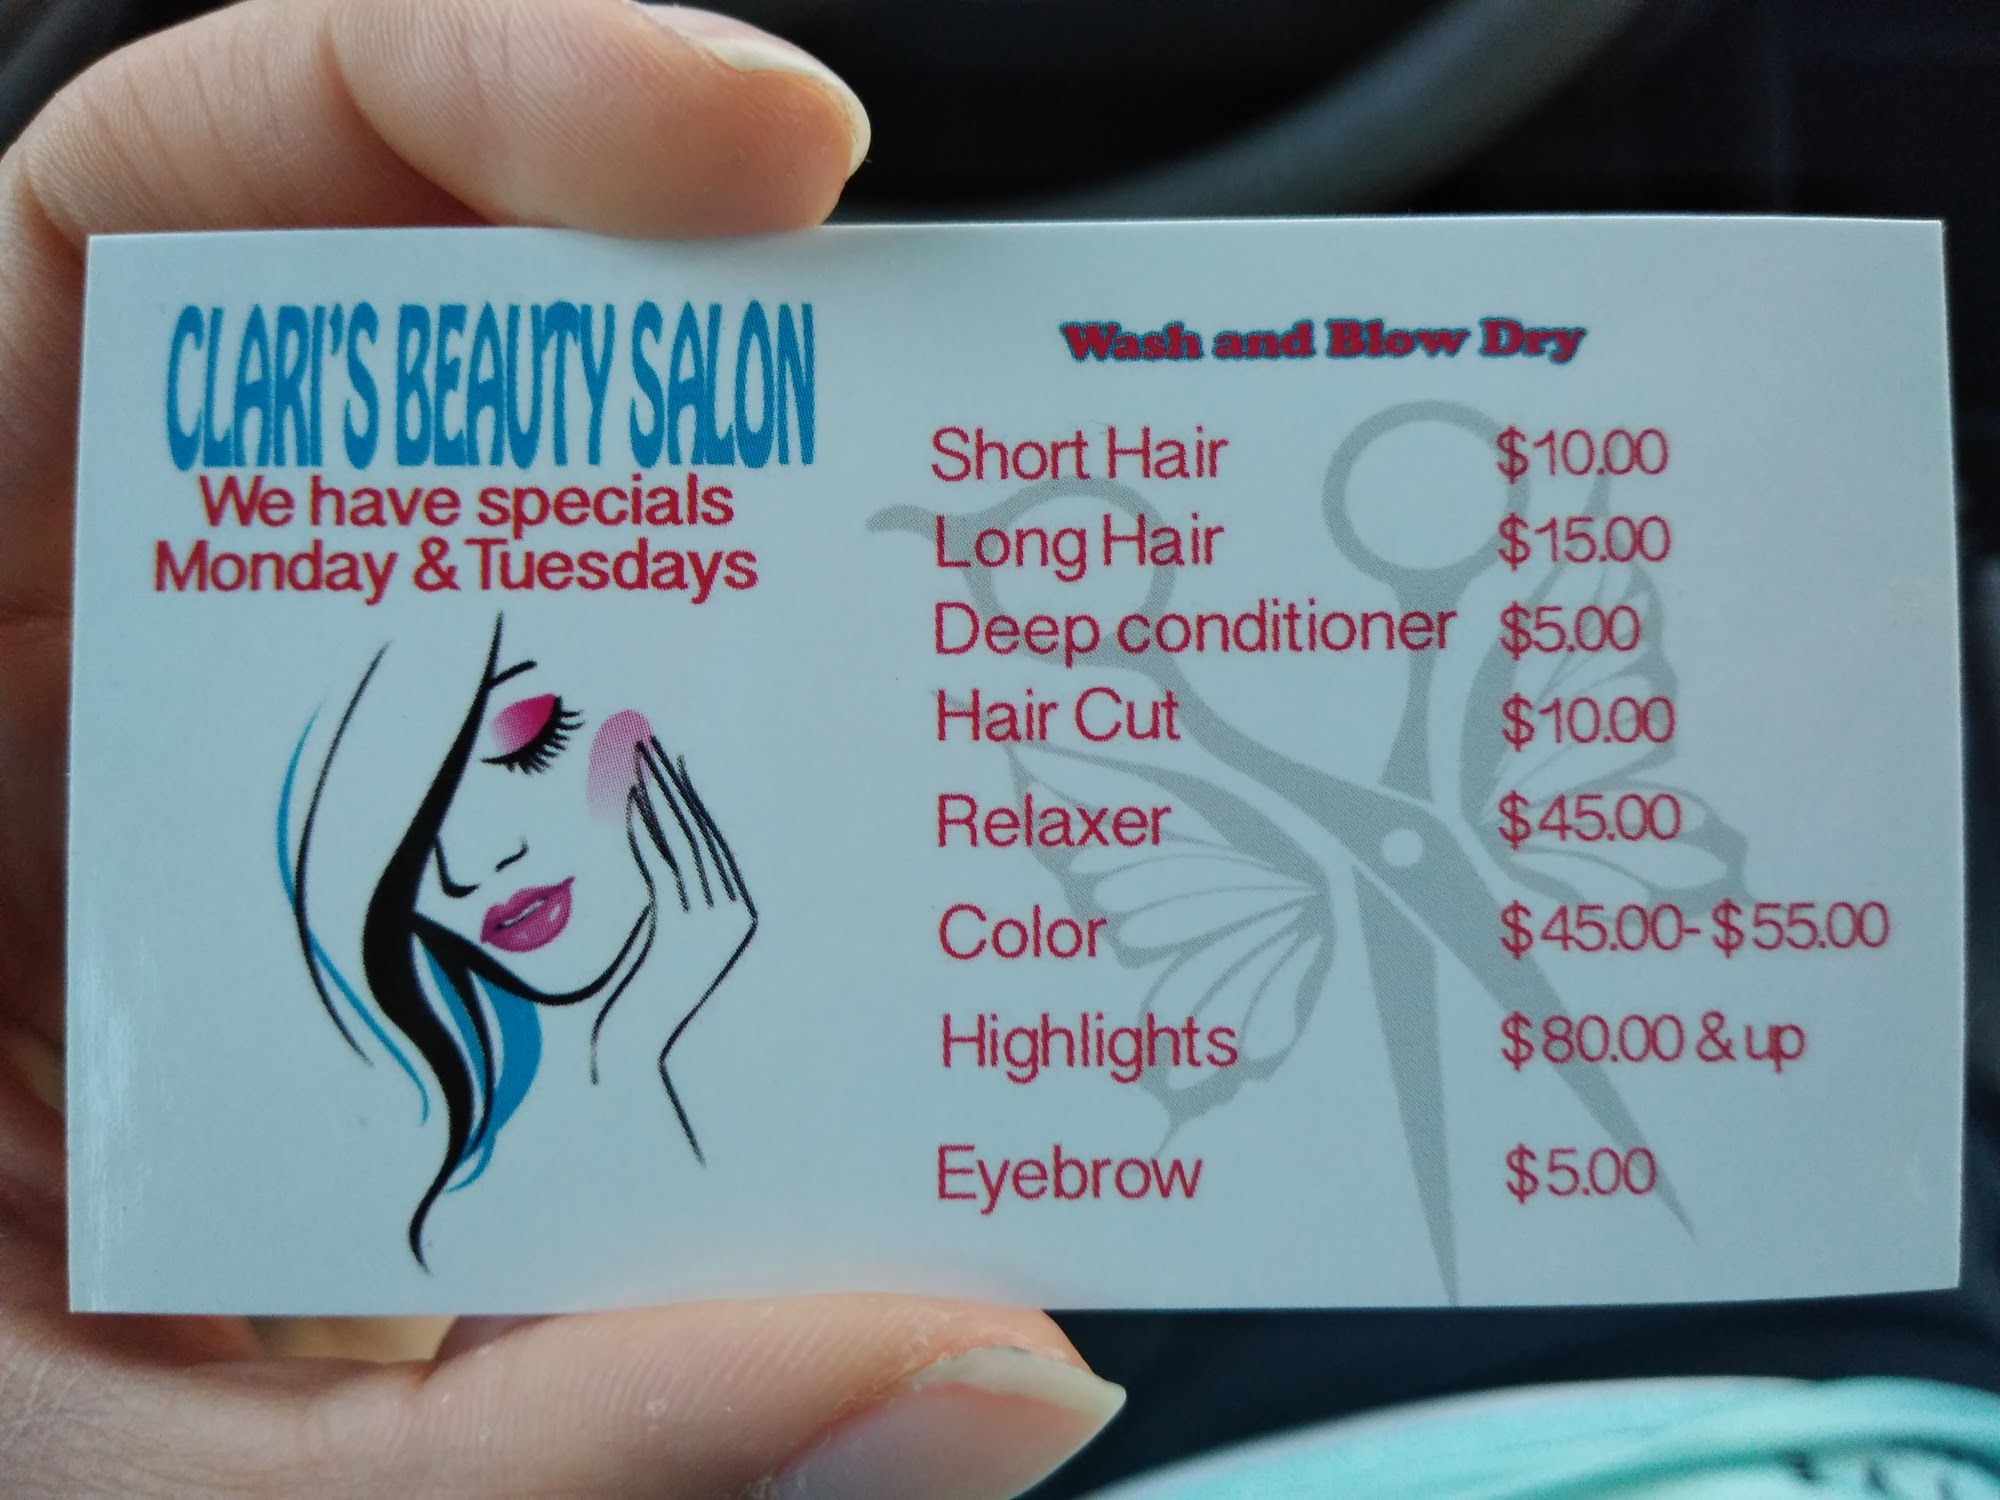 Clari's Beauty Salon